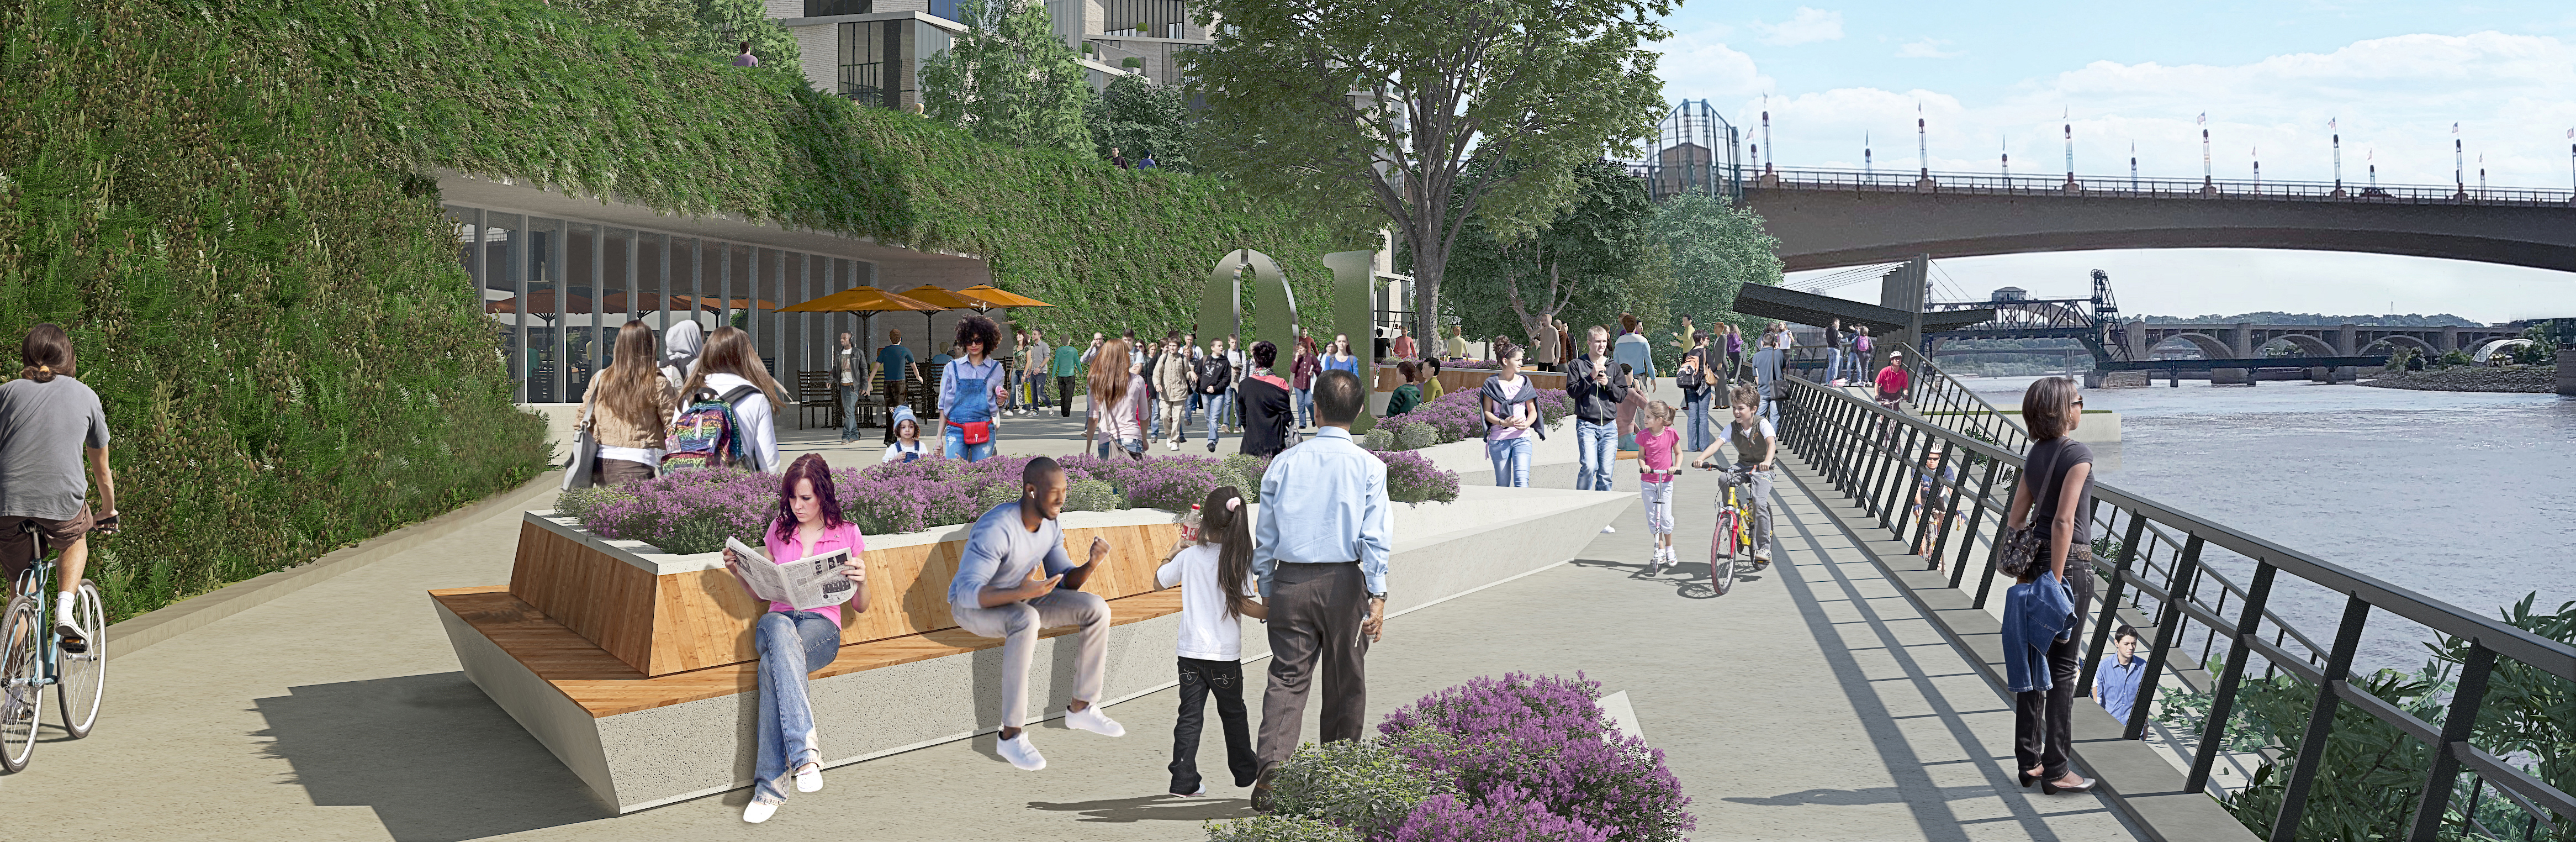 RiversEdge plaza rendering